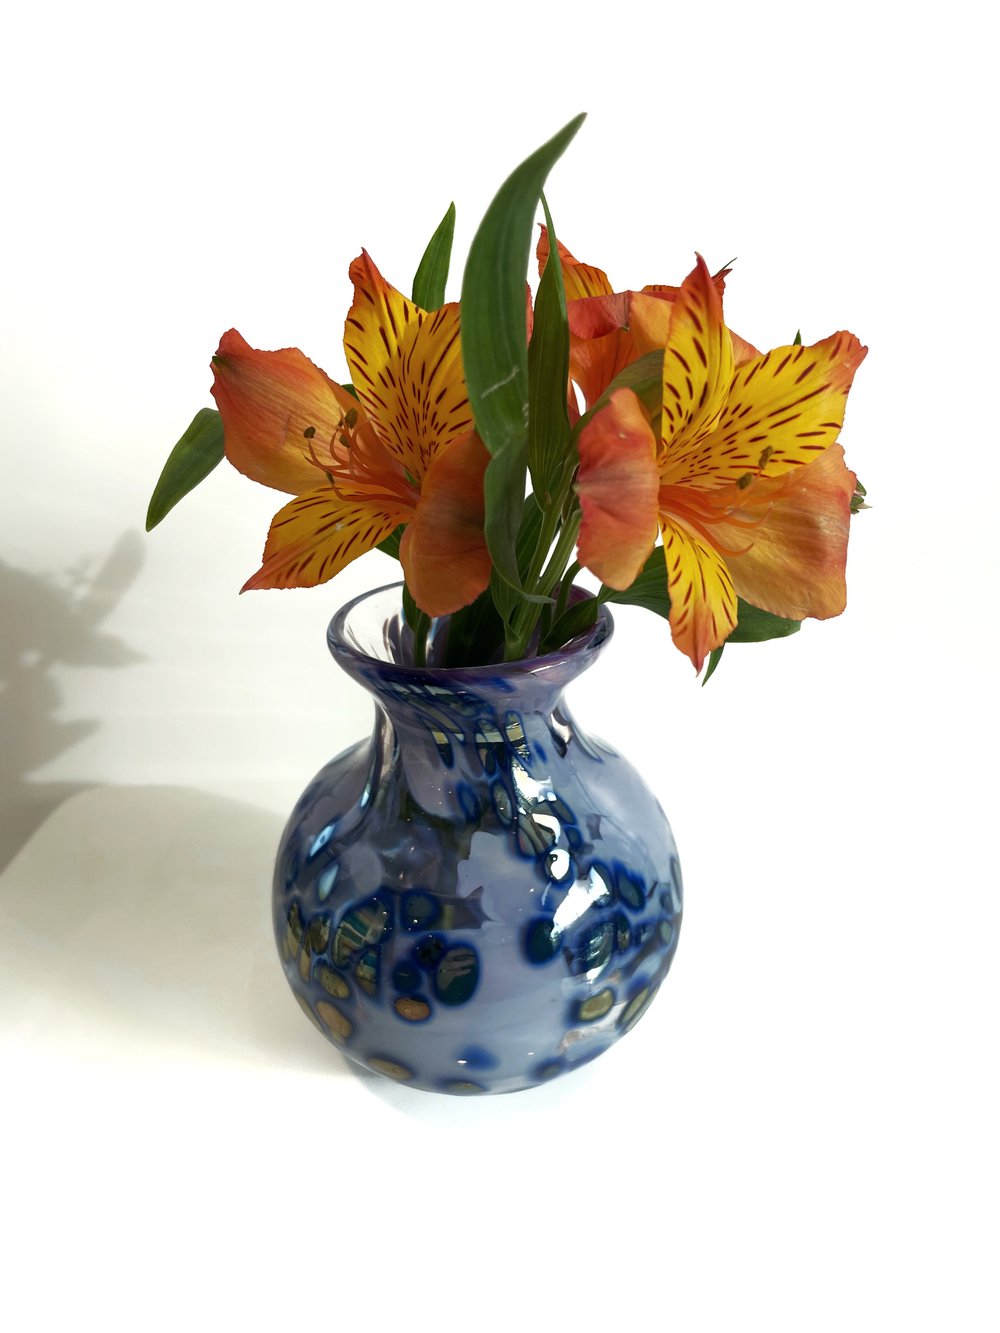 Iridescent Blue on Purple Blown Glass Vase